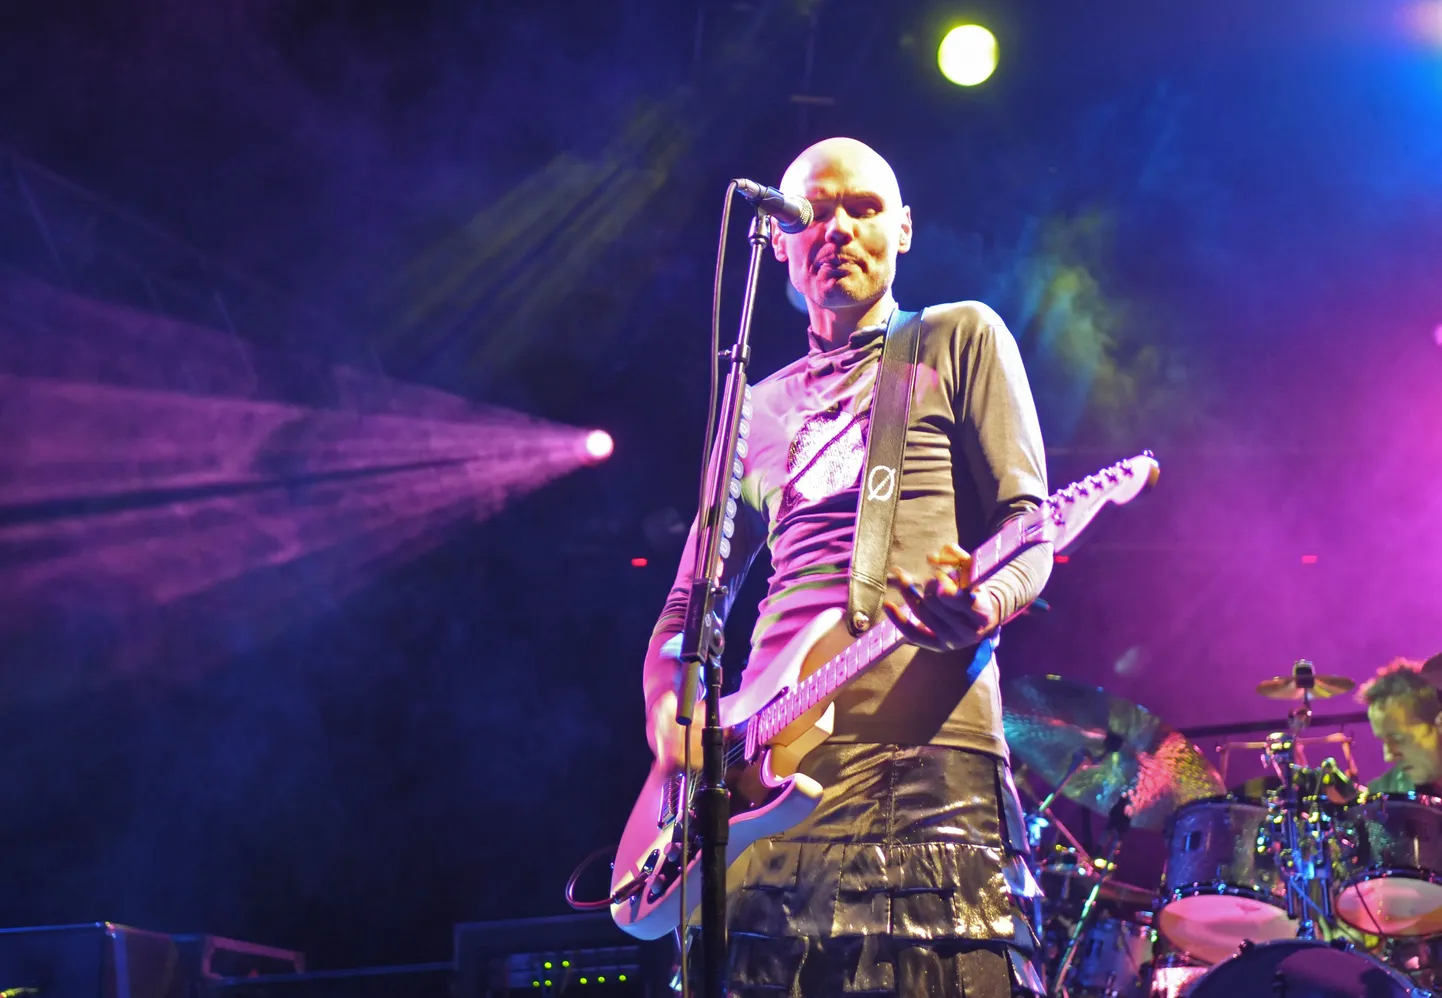 Ansambli Smashing Pumpkins liider Billy Corgan